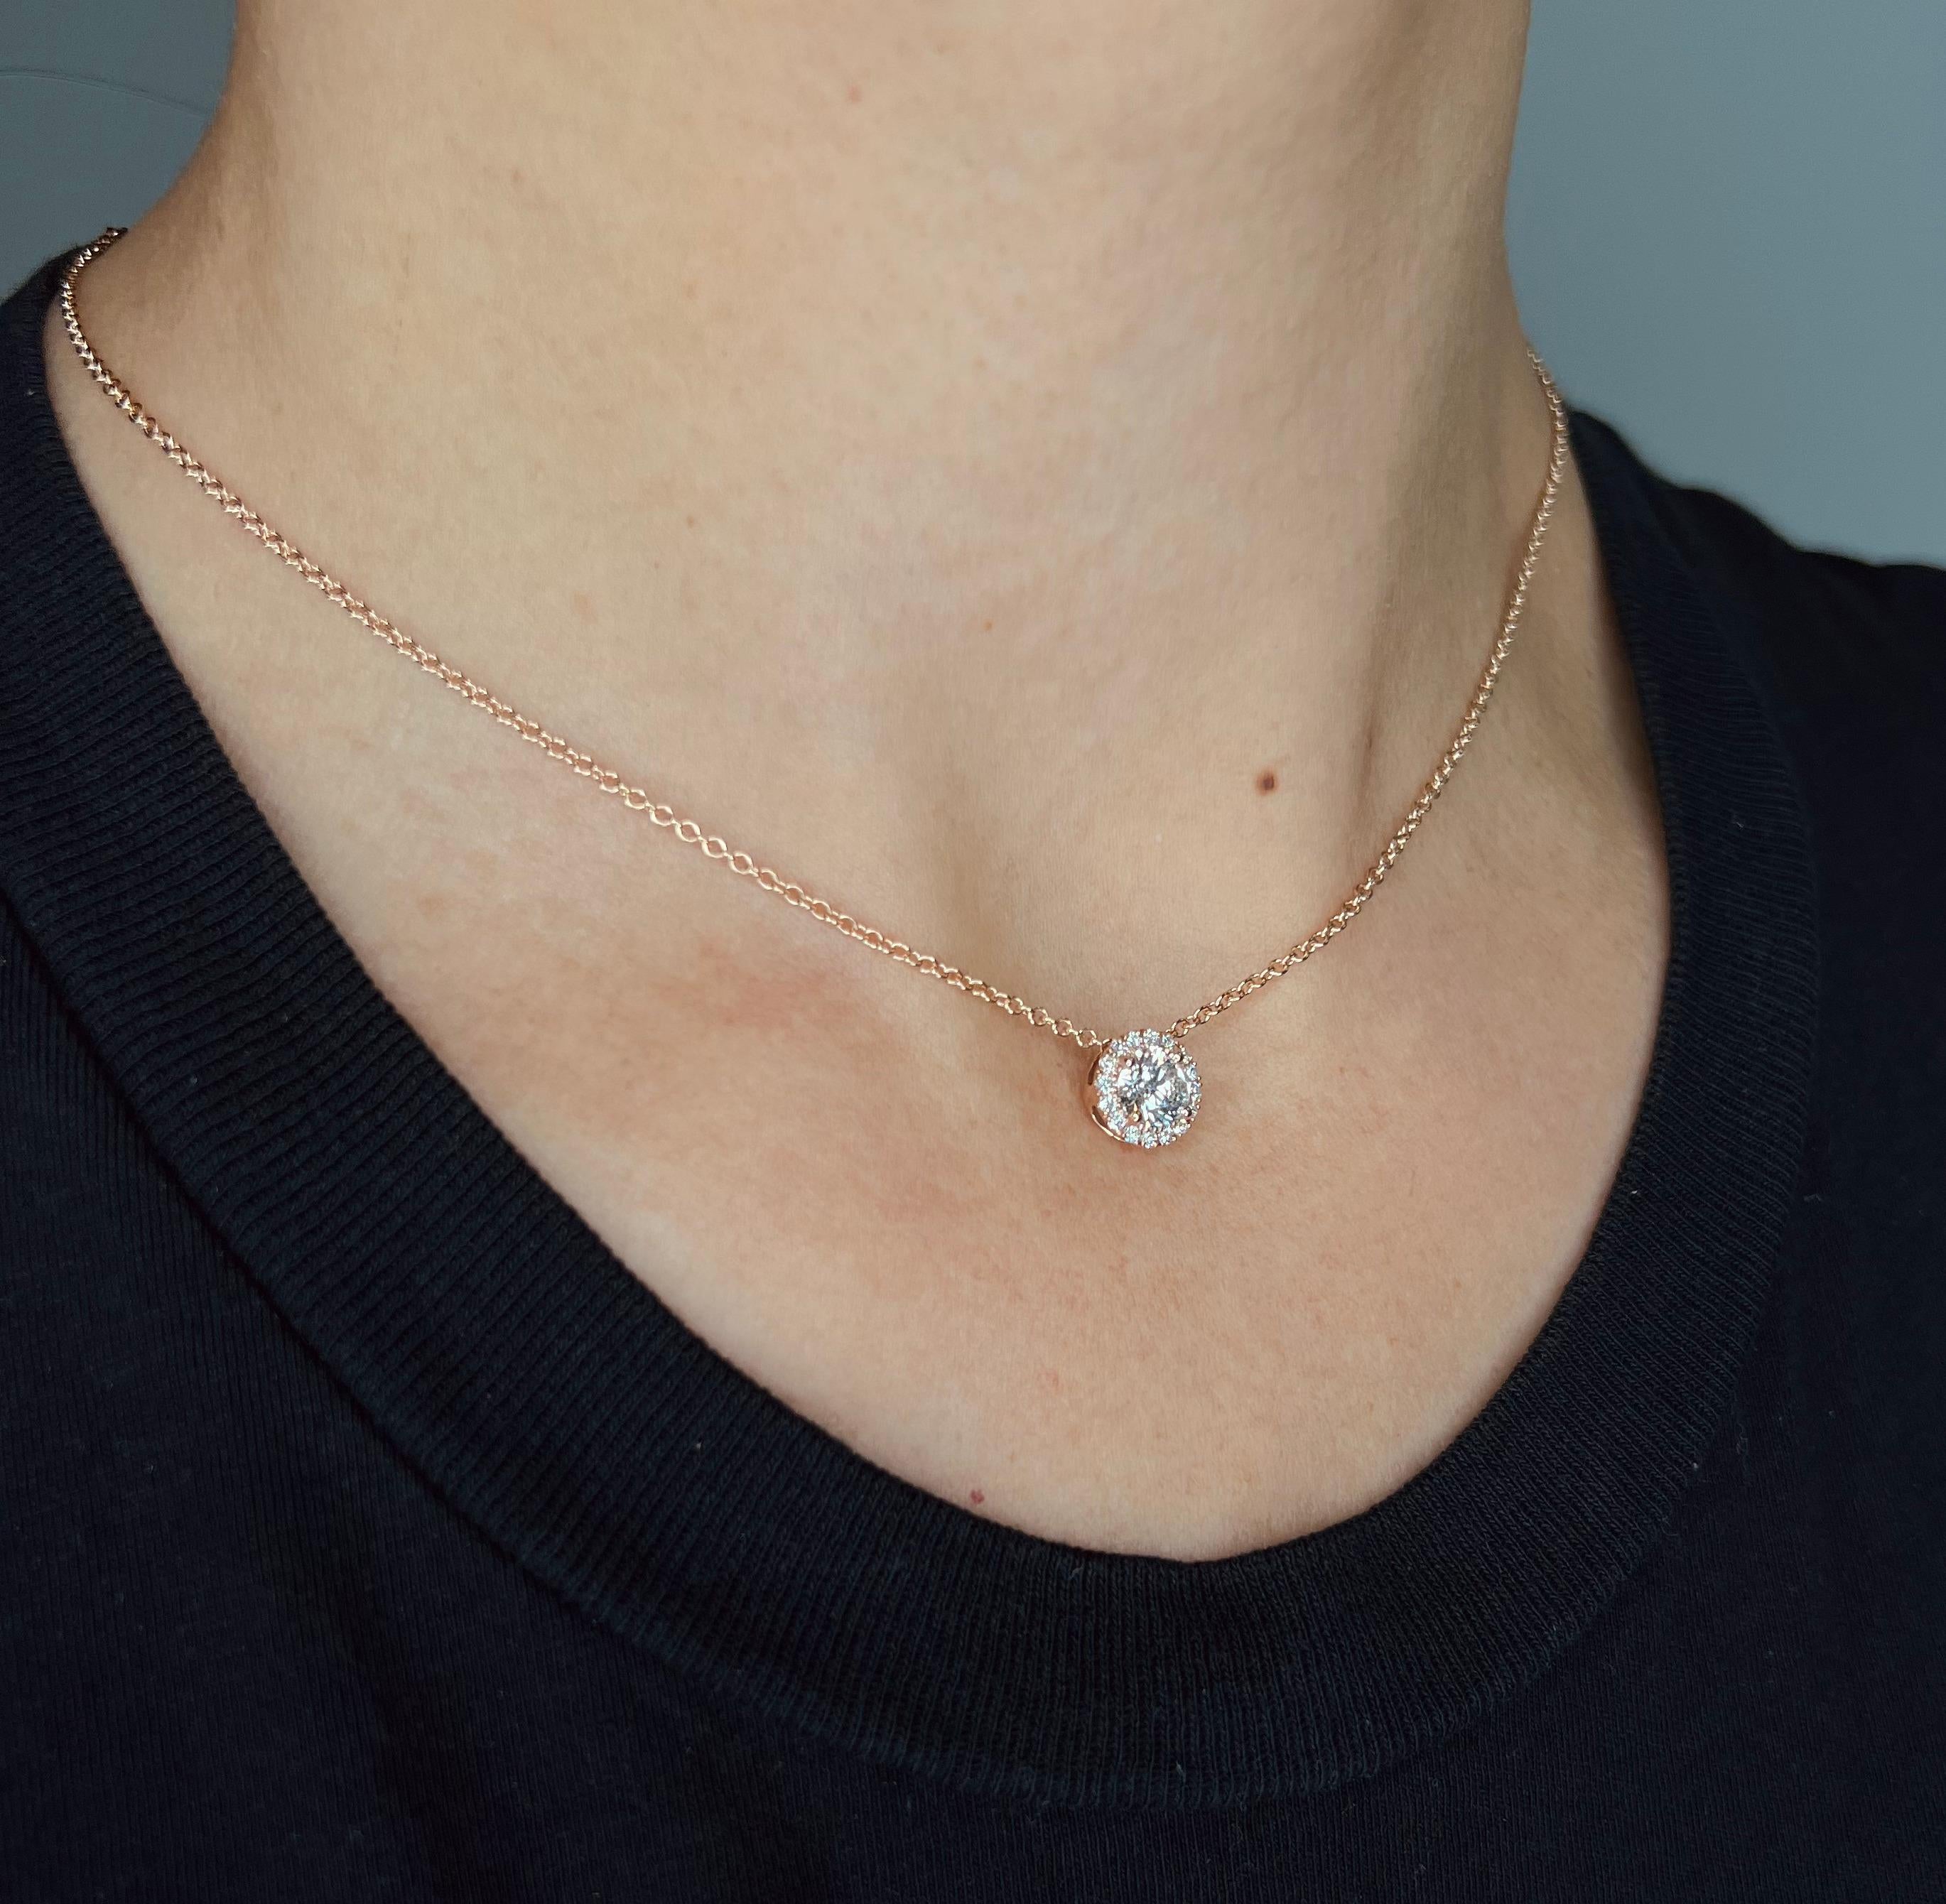 Women's or Men's 14k Rose Gold 0.40 Carat Round Cut Diamond Solitaire Pendant Necklace For Sale